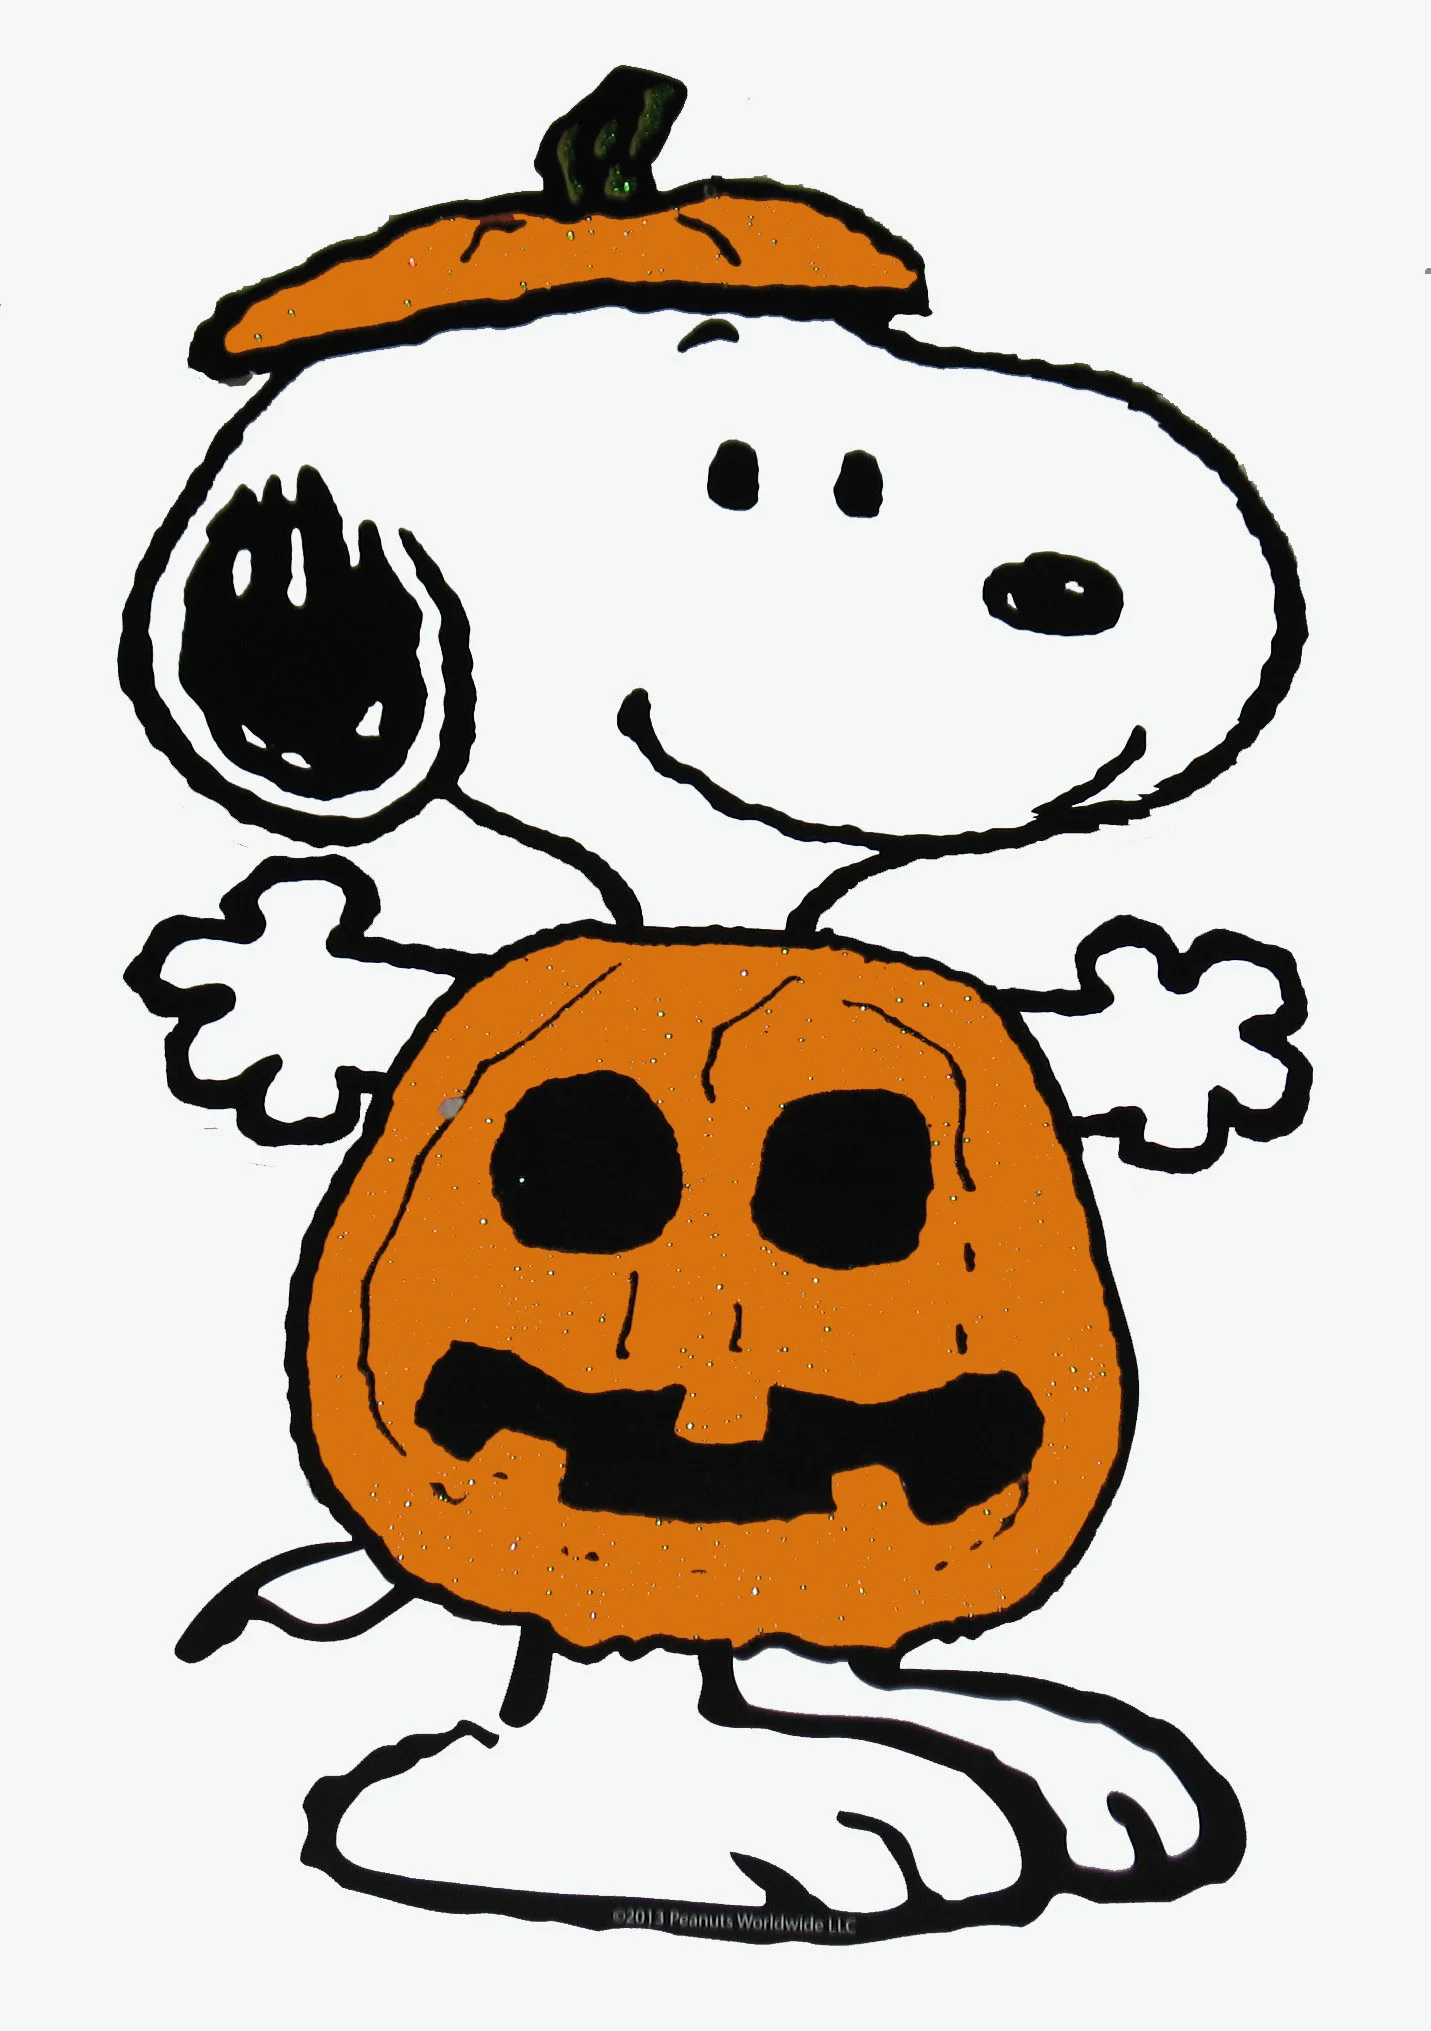 Peanuts Gang Sparkling Halloween Die Cut Wall Decor – Snoopy